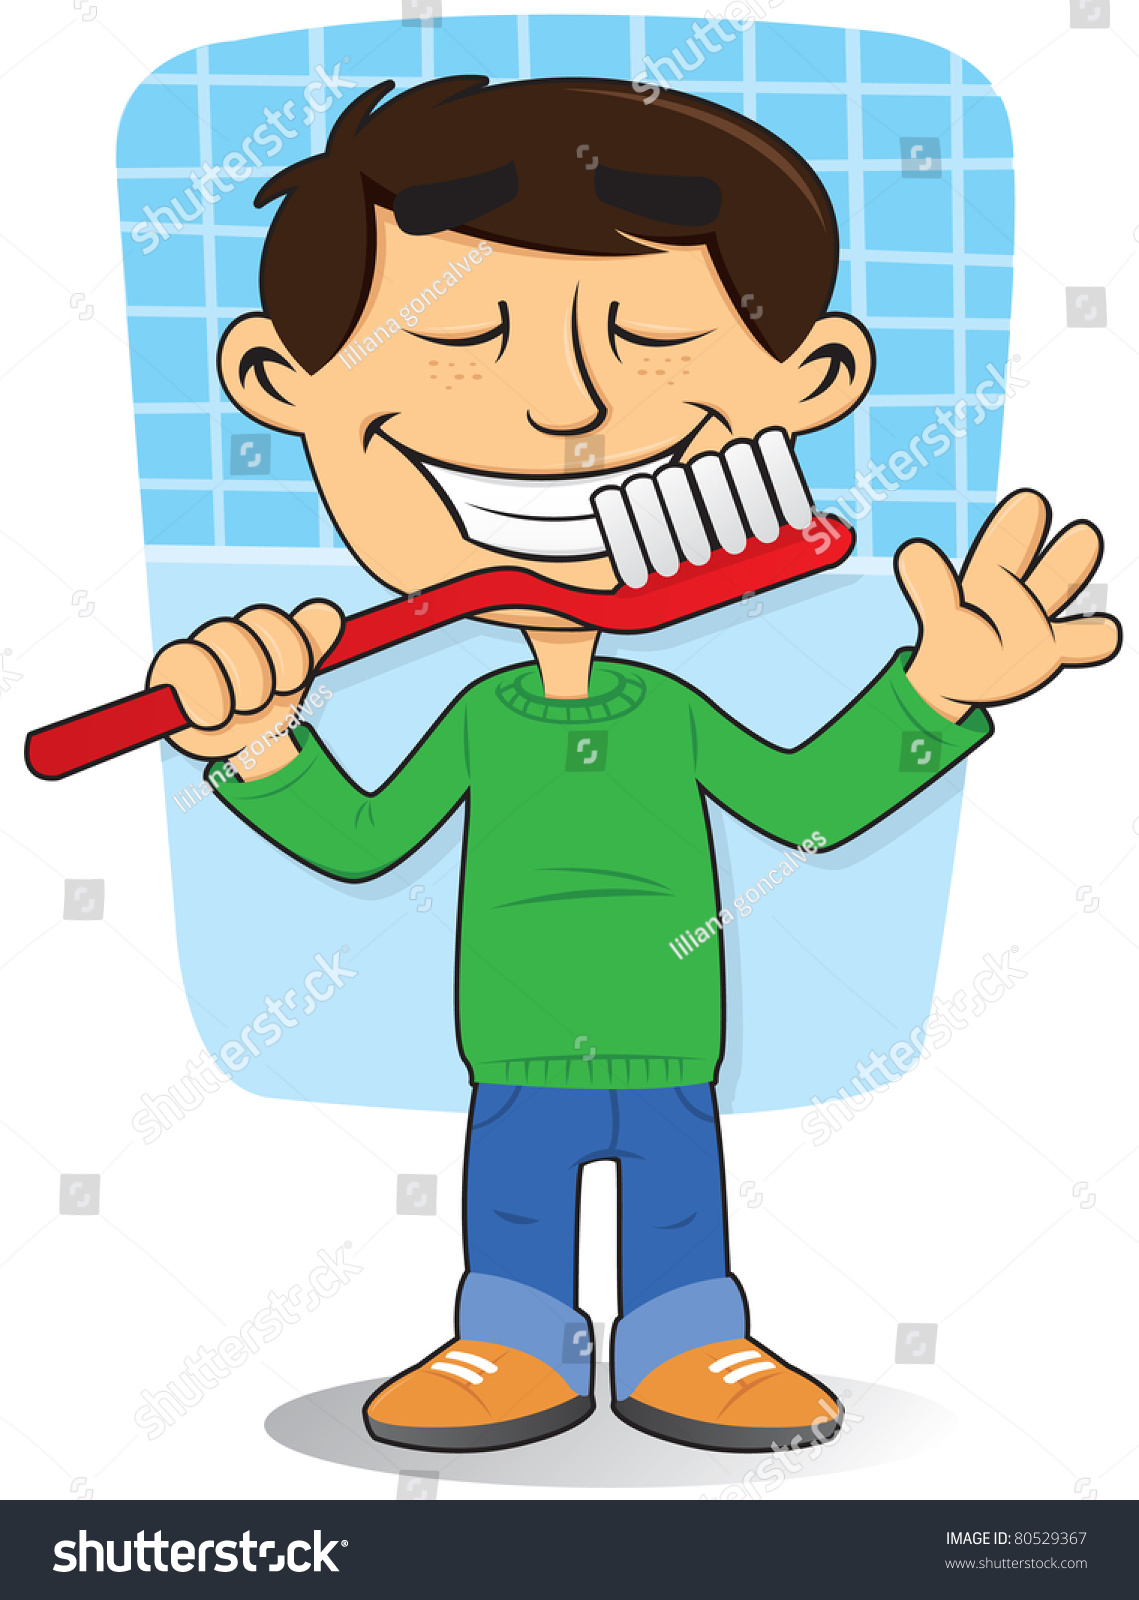 clipart boy brushing teeth - photo #20